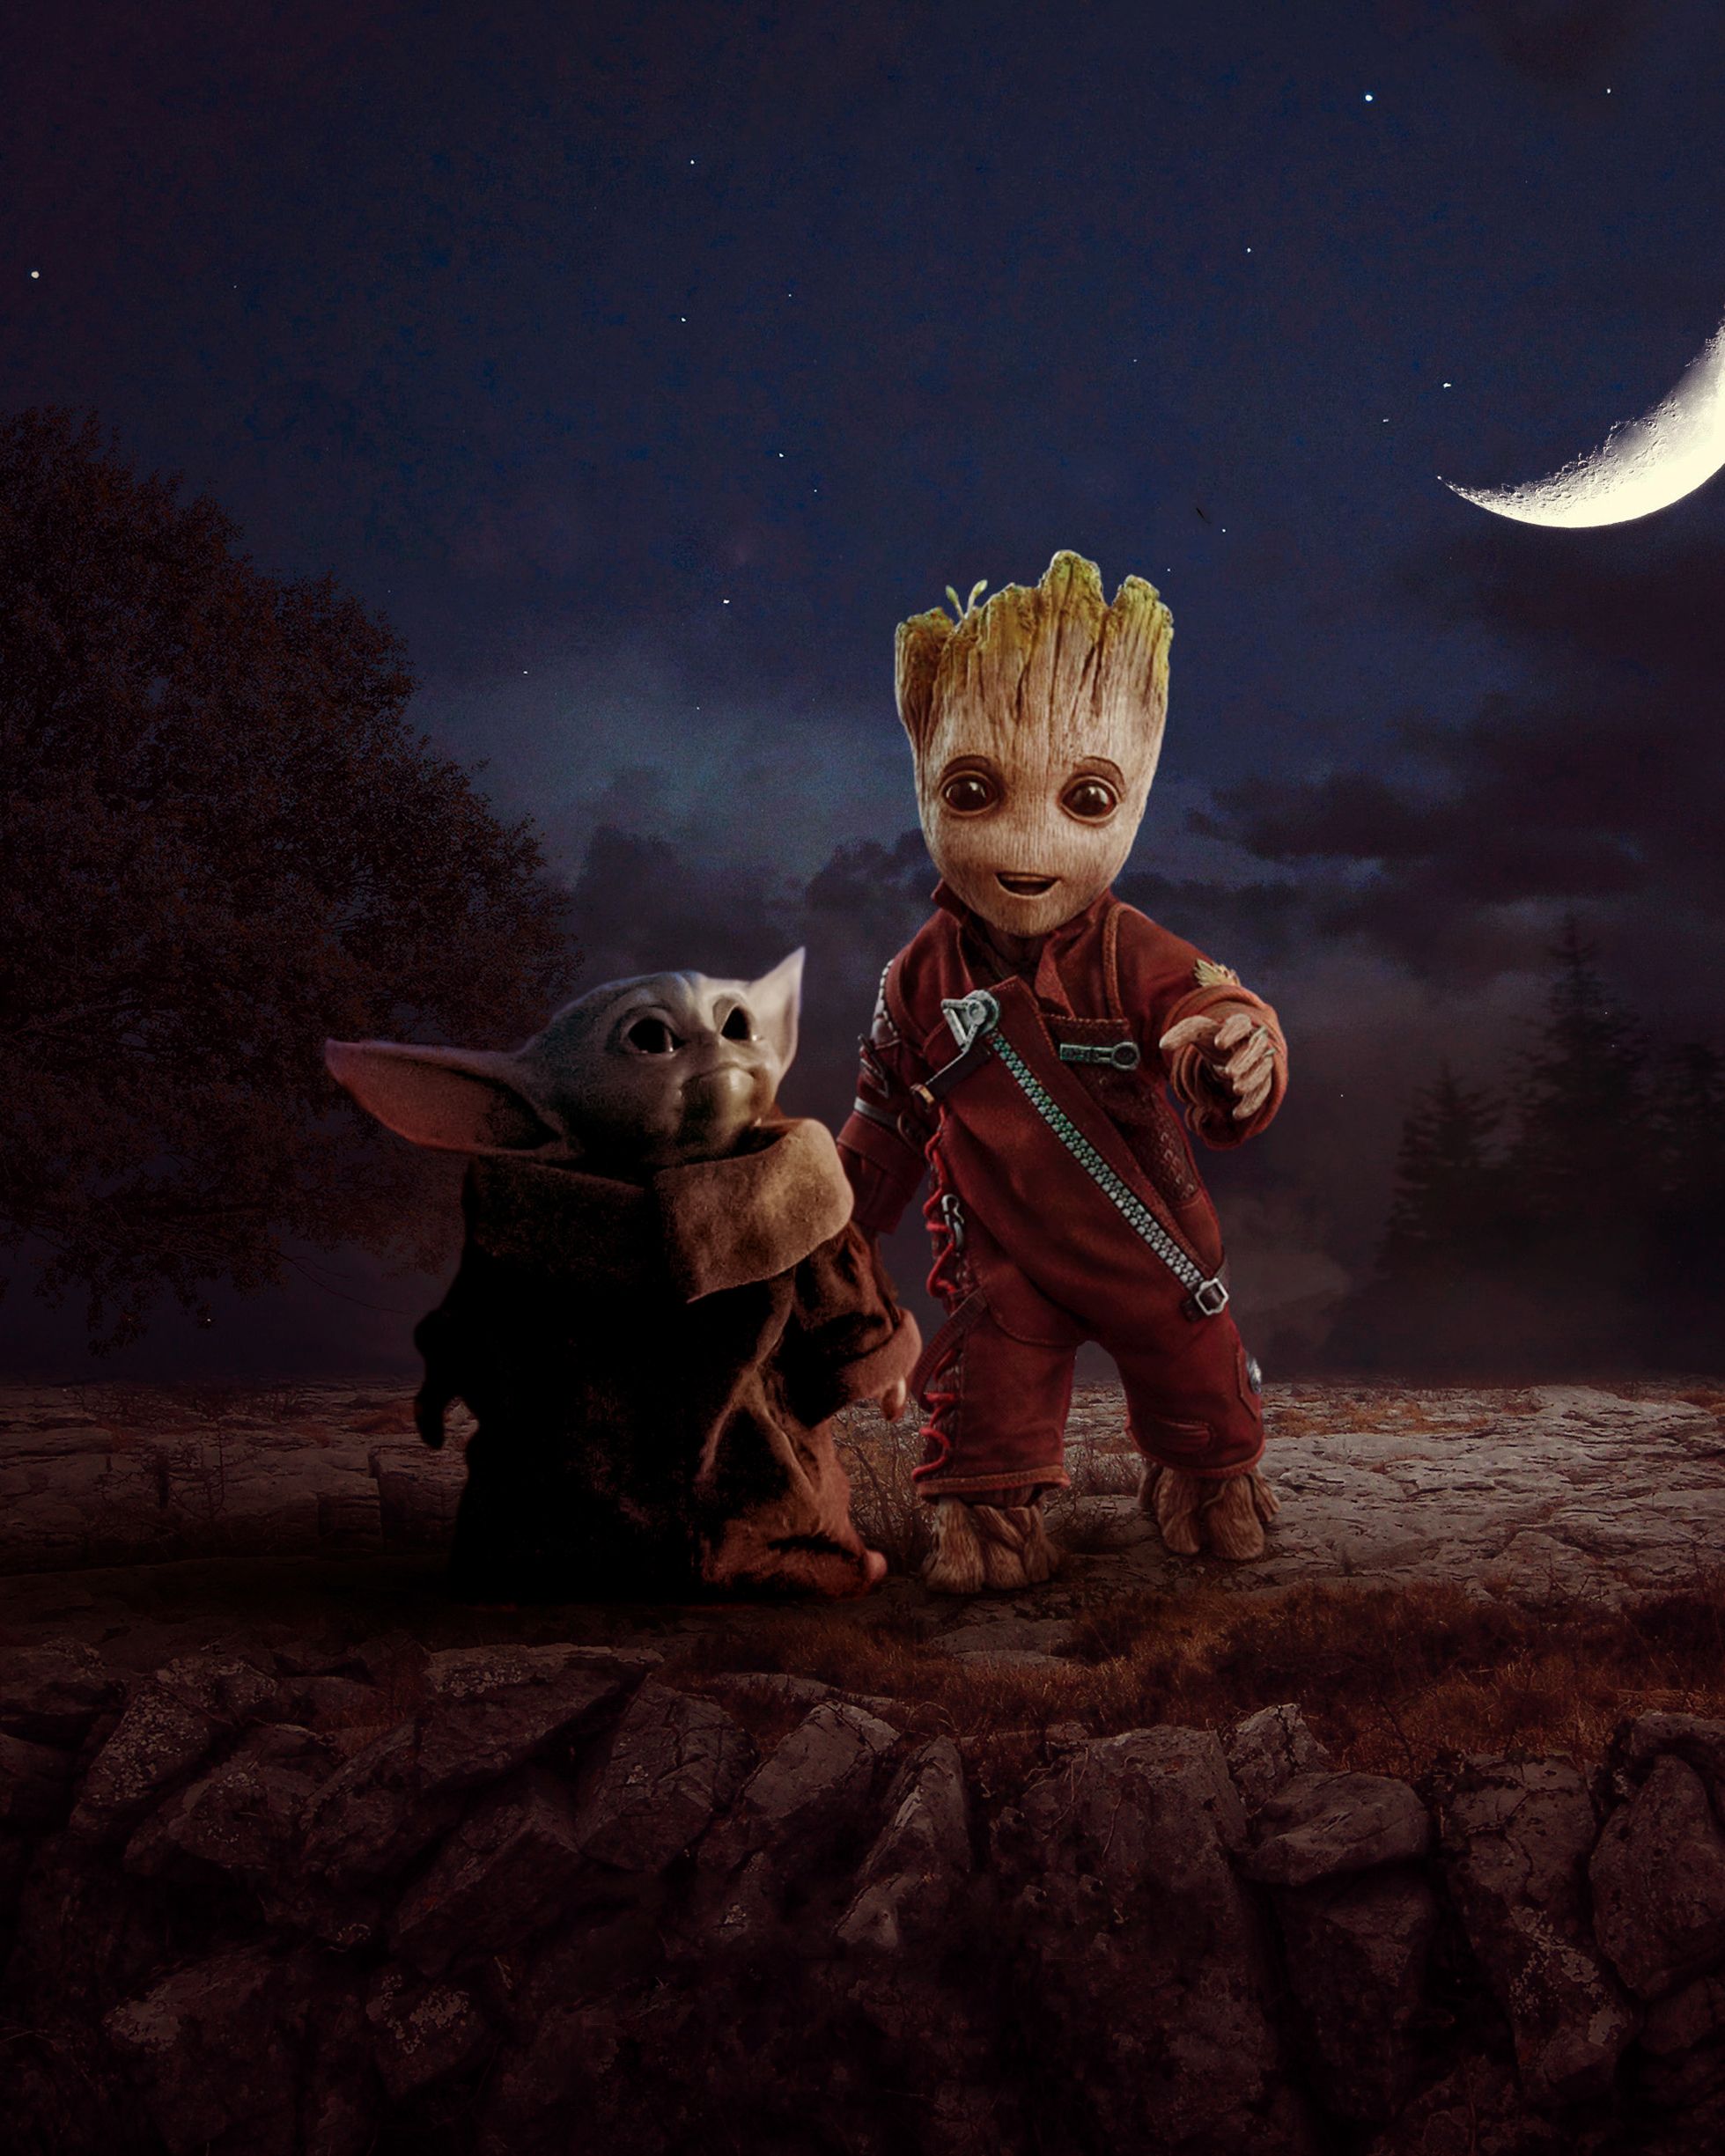 Groot and Baby Yoda Wallpaper, HD Superheroes 4K Wallpaper